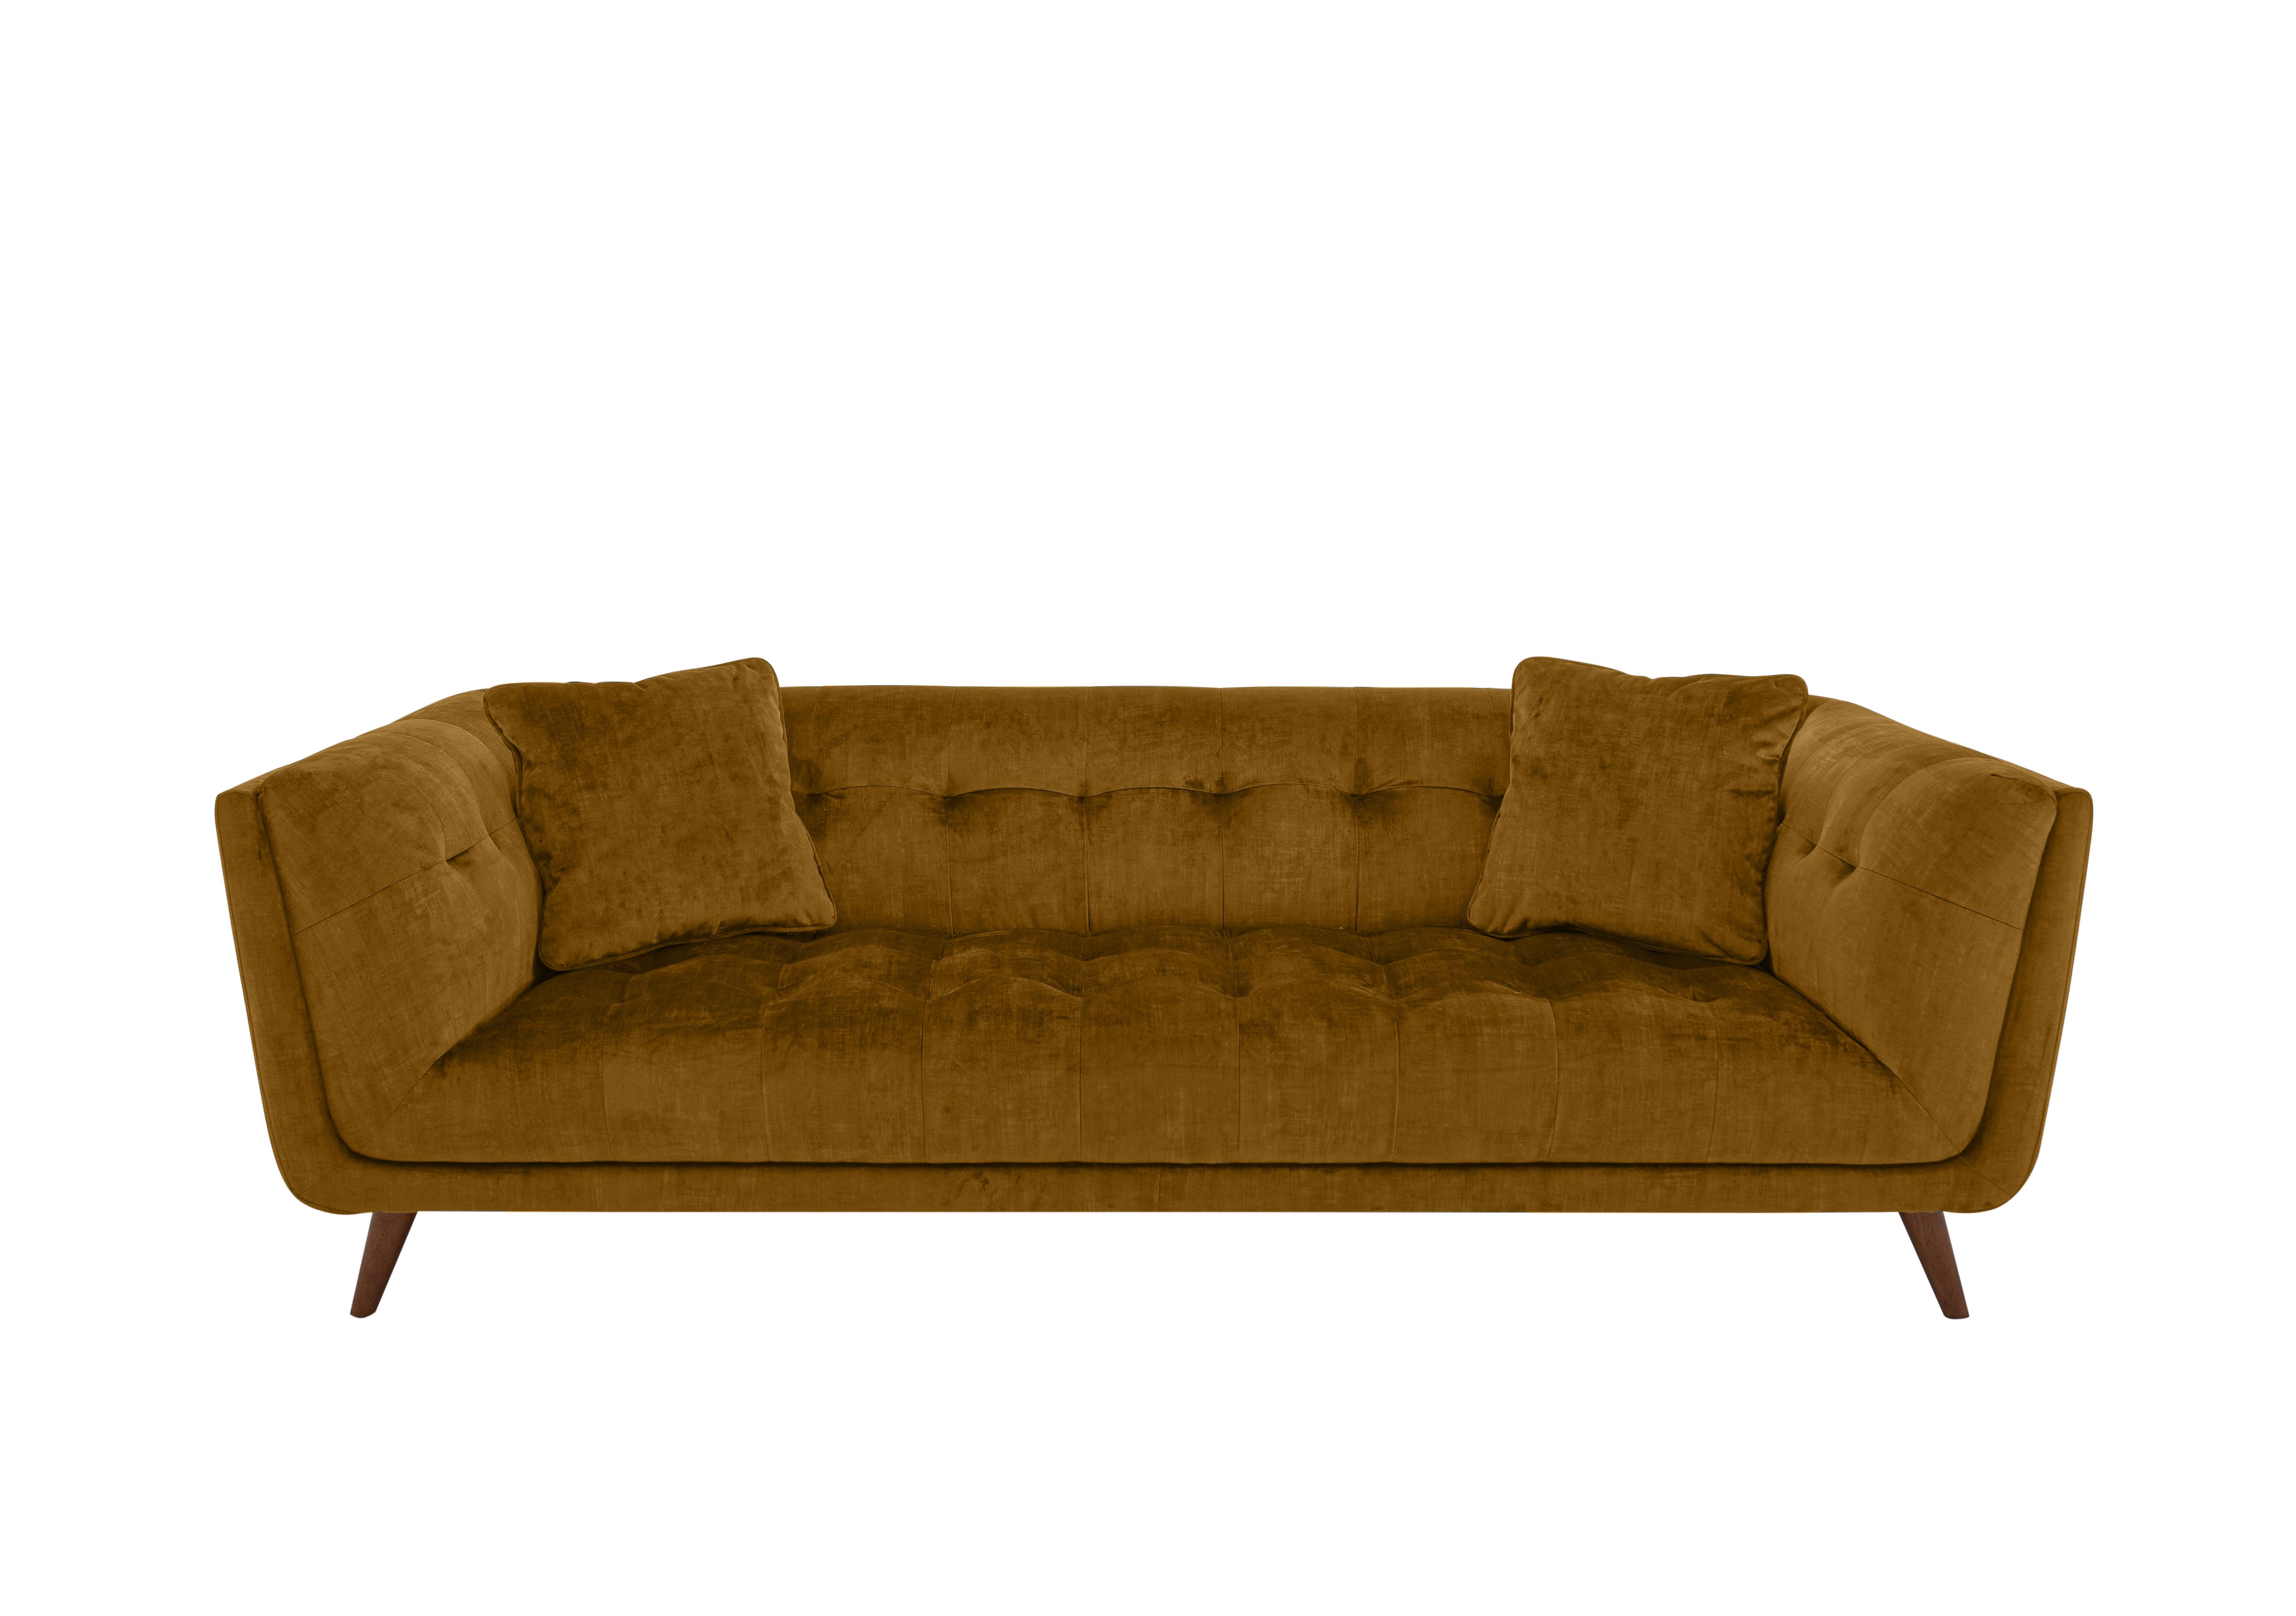 Rene 3 Seater Fabric Sofa in 52002 Heritage Saffron Wa Ft on Furniture Village